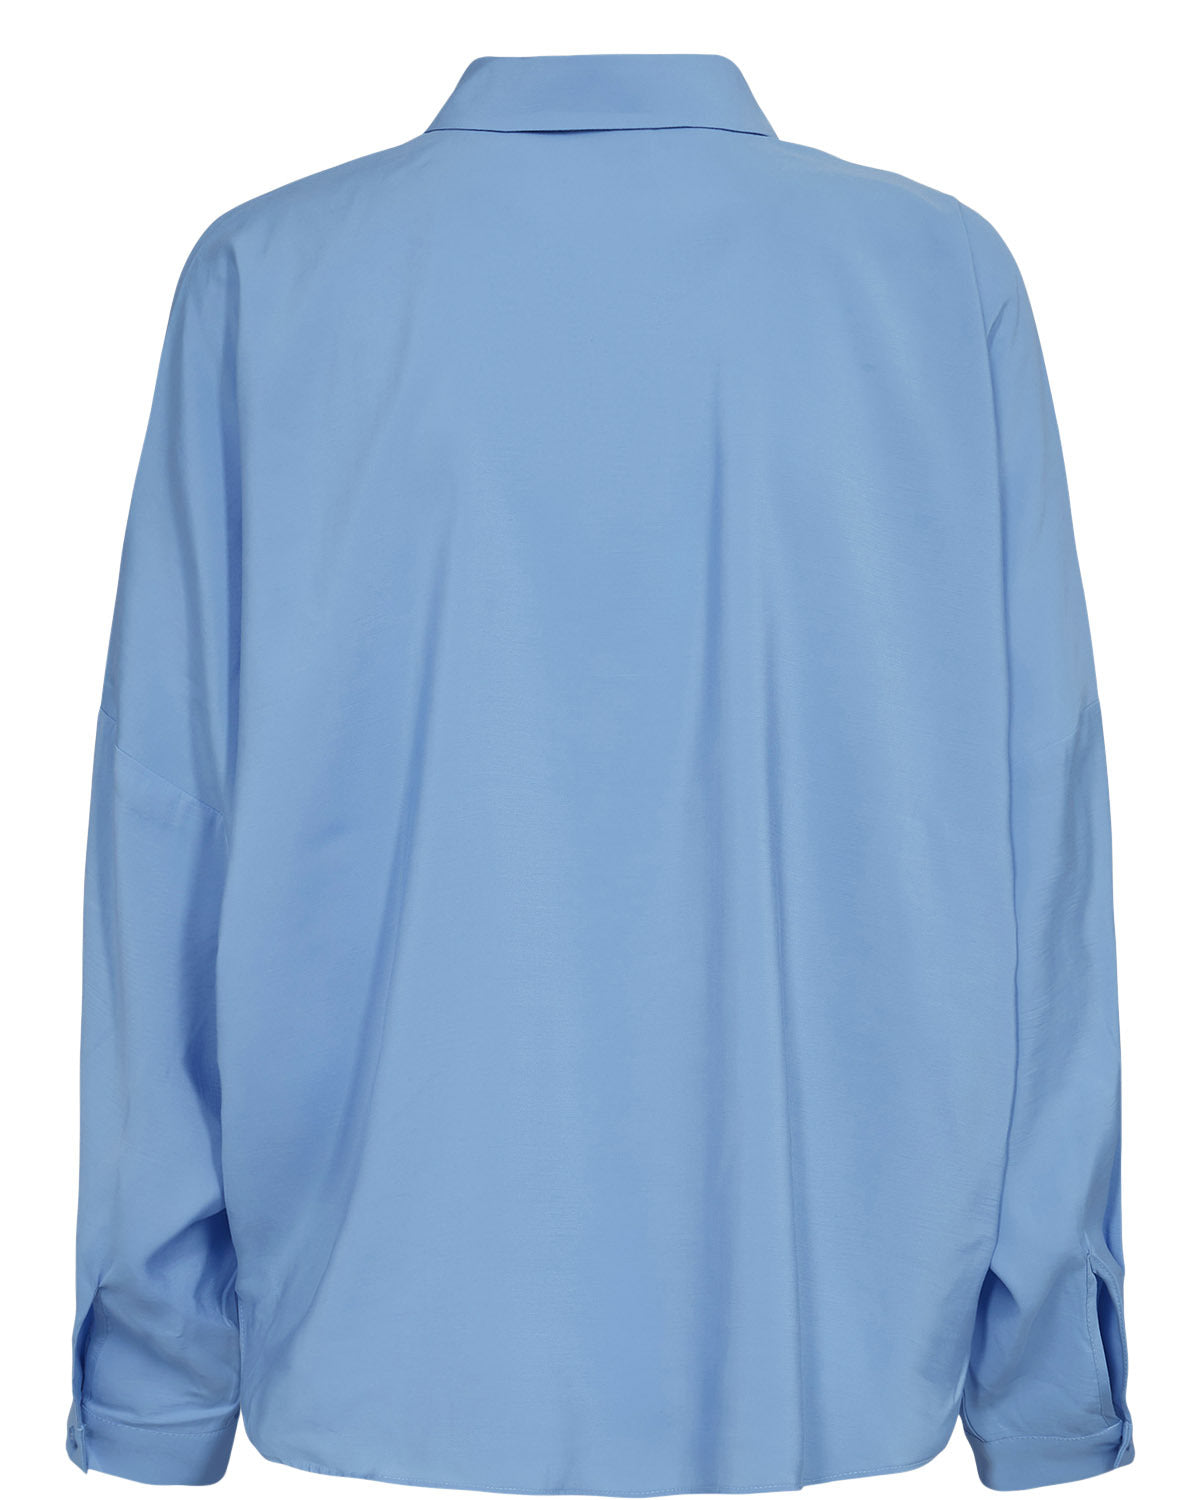 Numph nuessy shirt - Vista blue